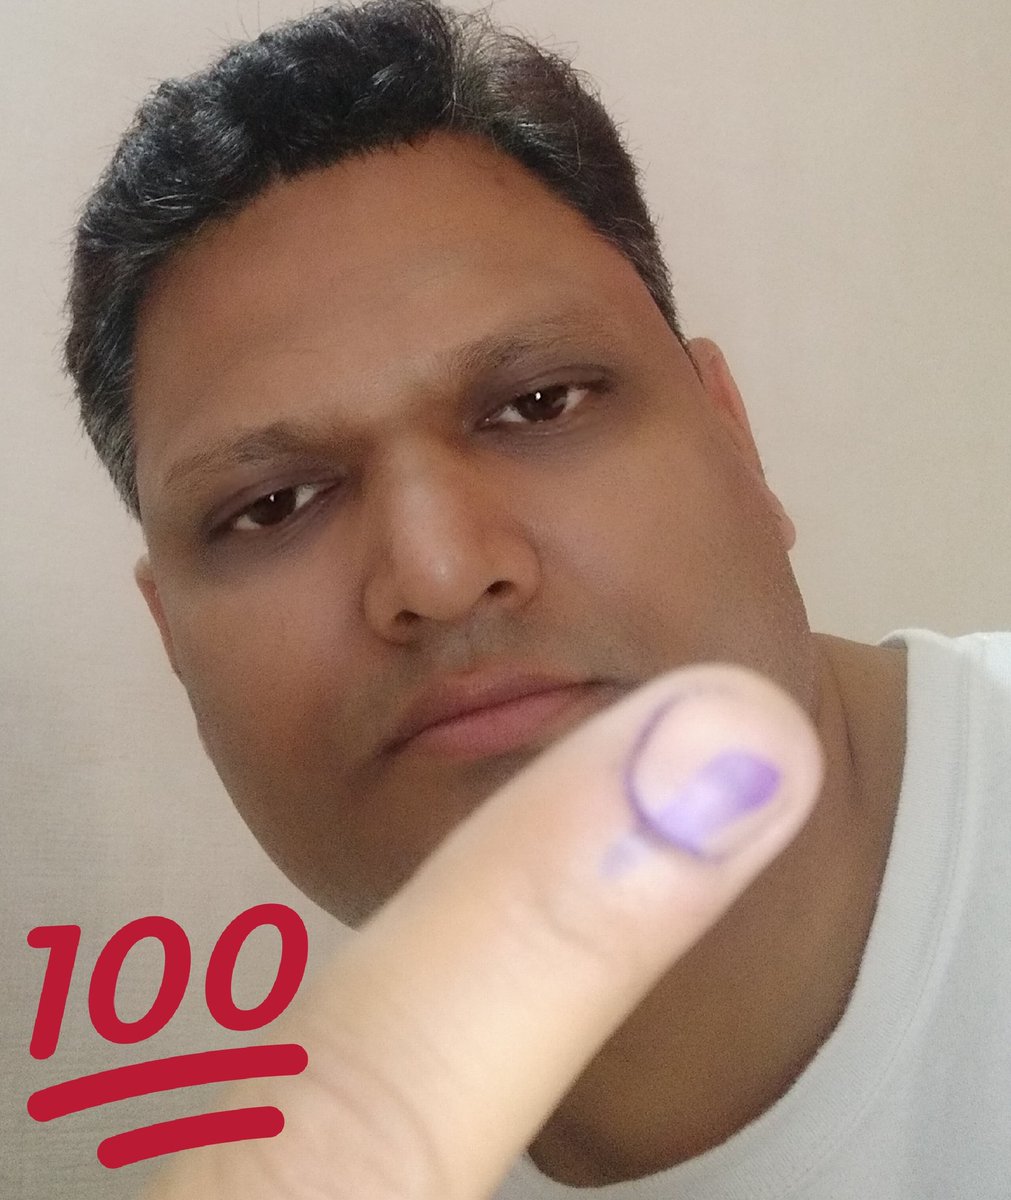 My Vote to #CorruptionfreeIndia  #CleanIndia #ProgressiveIndia #UnitedIndia #PowerfullIndia my vote to #ModiOnceMore on this great festival of #Elections2019 
#ModiHaiToMumkinHai @narendramodi @sunilsahnibjp @ThePradeepBatra @tsrawatbjp @GauravGoelBJP @BJPMayankGupta